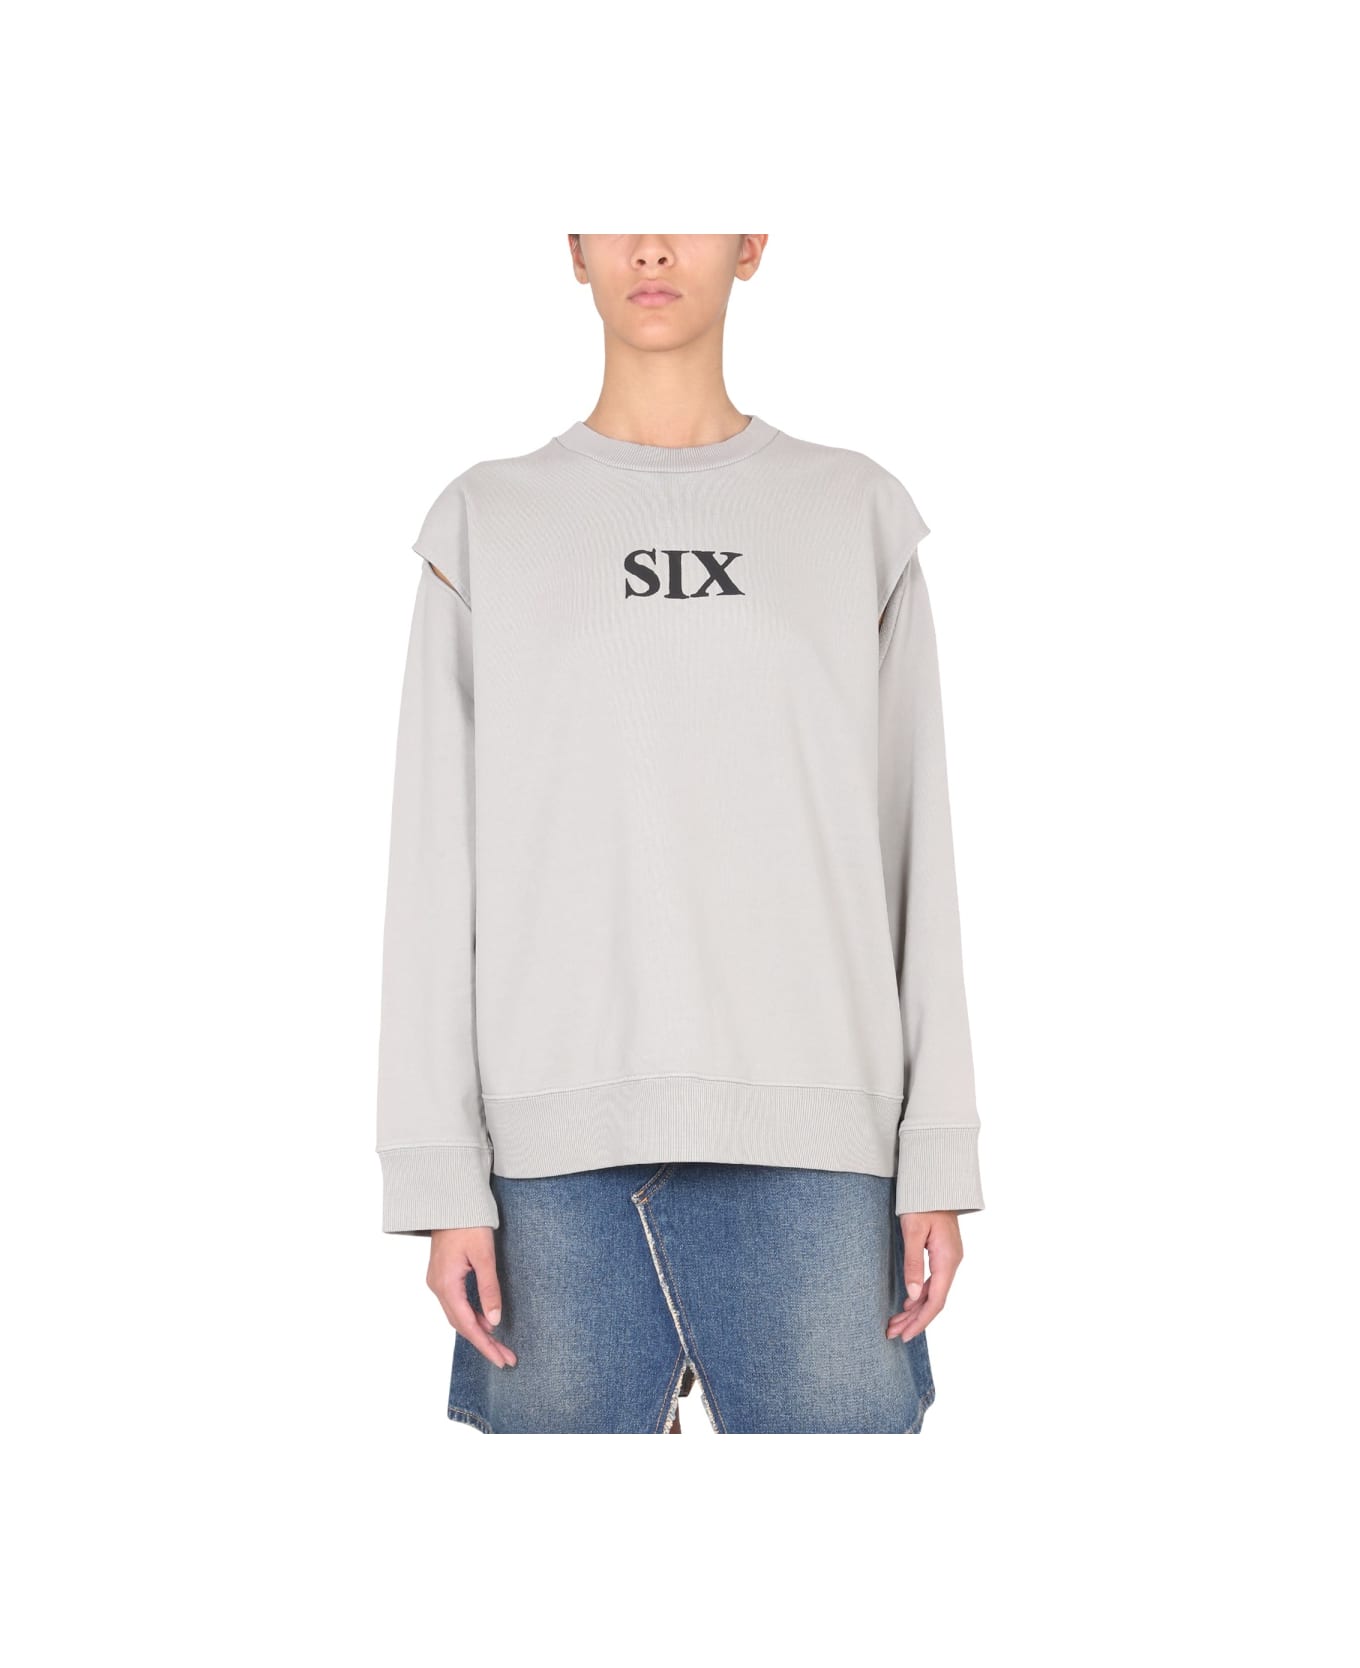 MM6 Maison Margiela Sweatshirt "six" - GREY